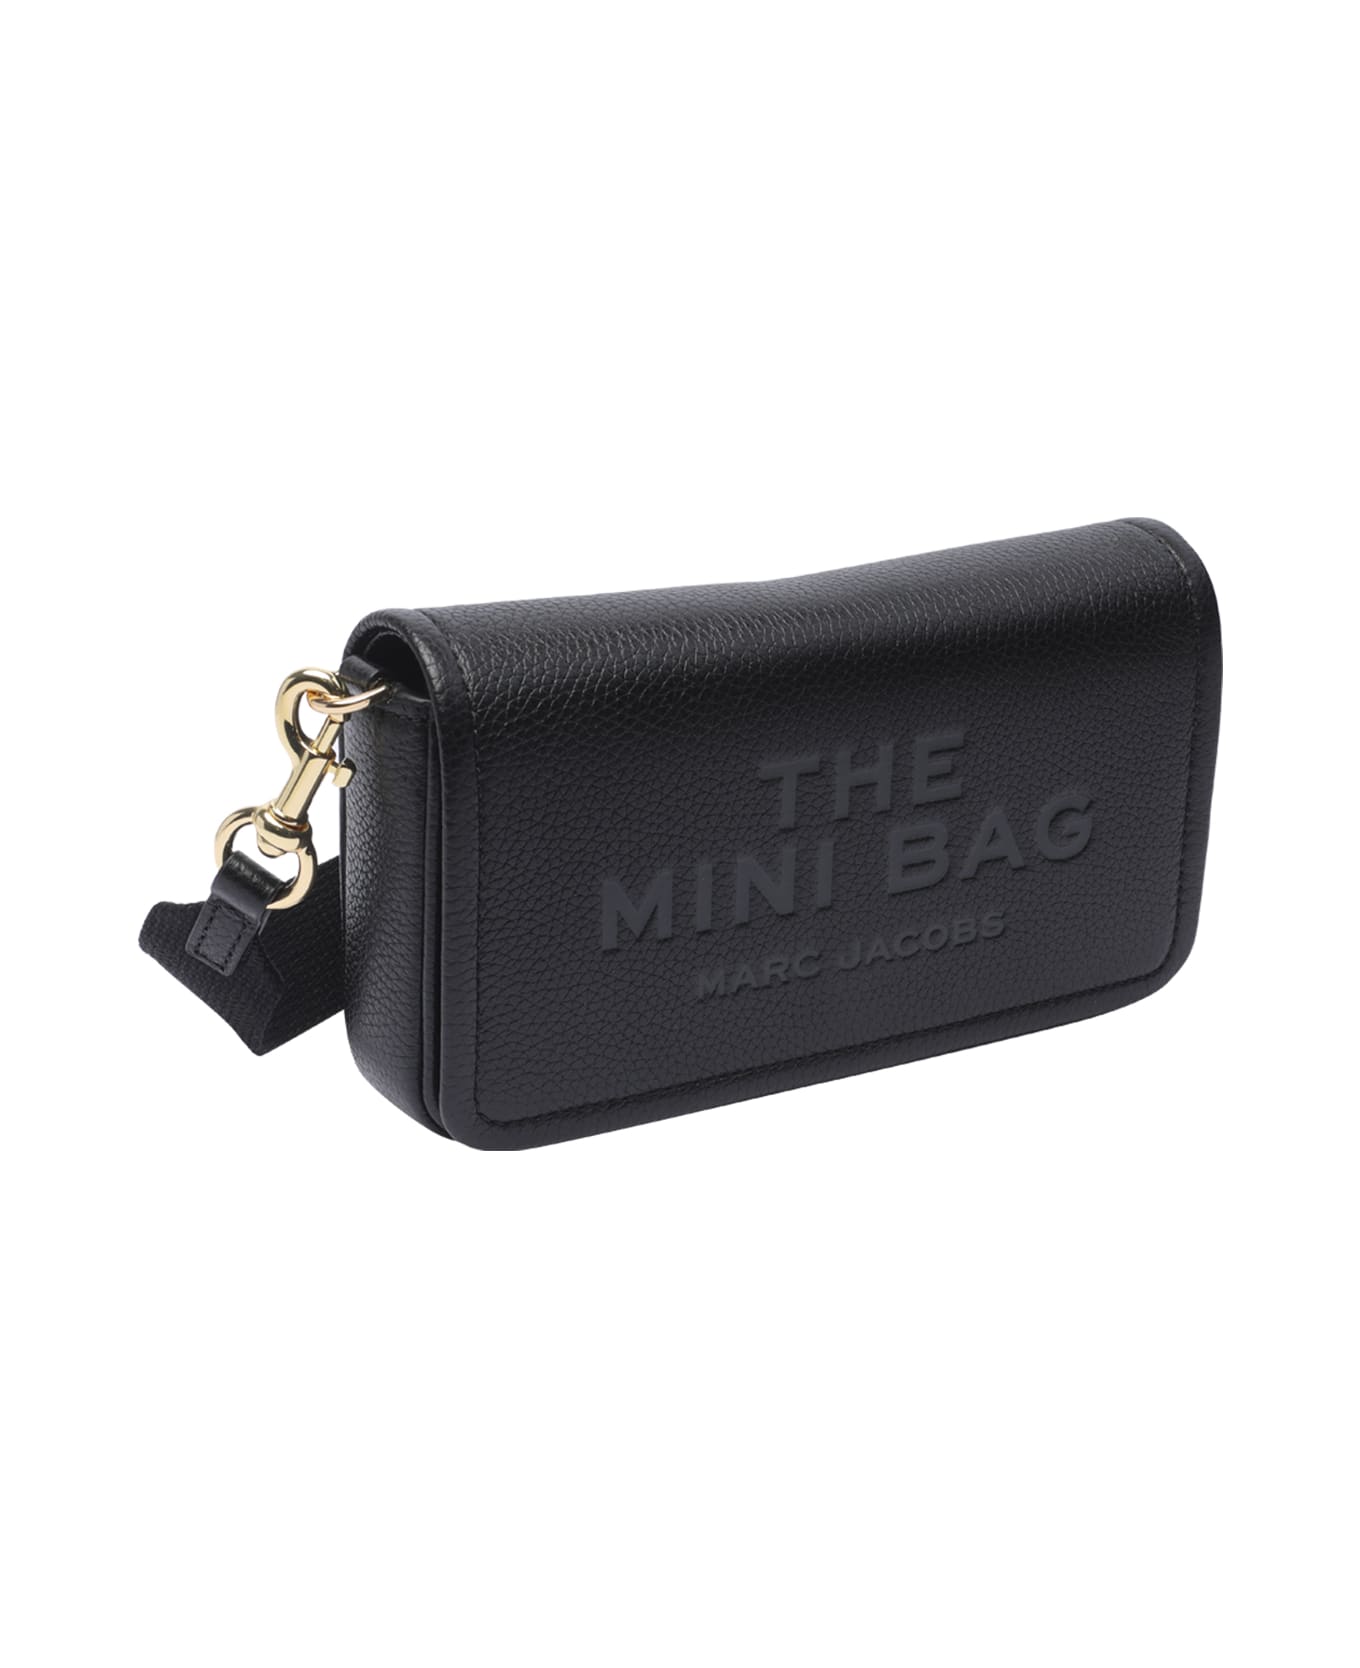 Marc Jacobs The Mini Bag Crossbody Bag - BLACK